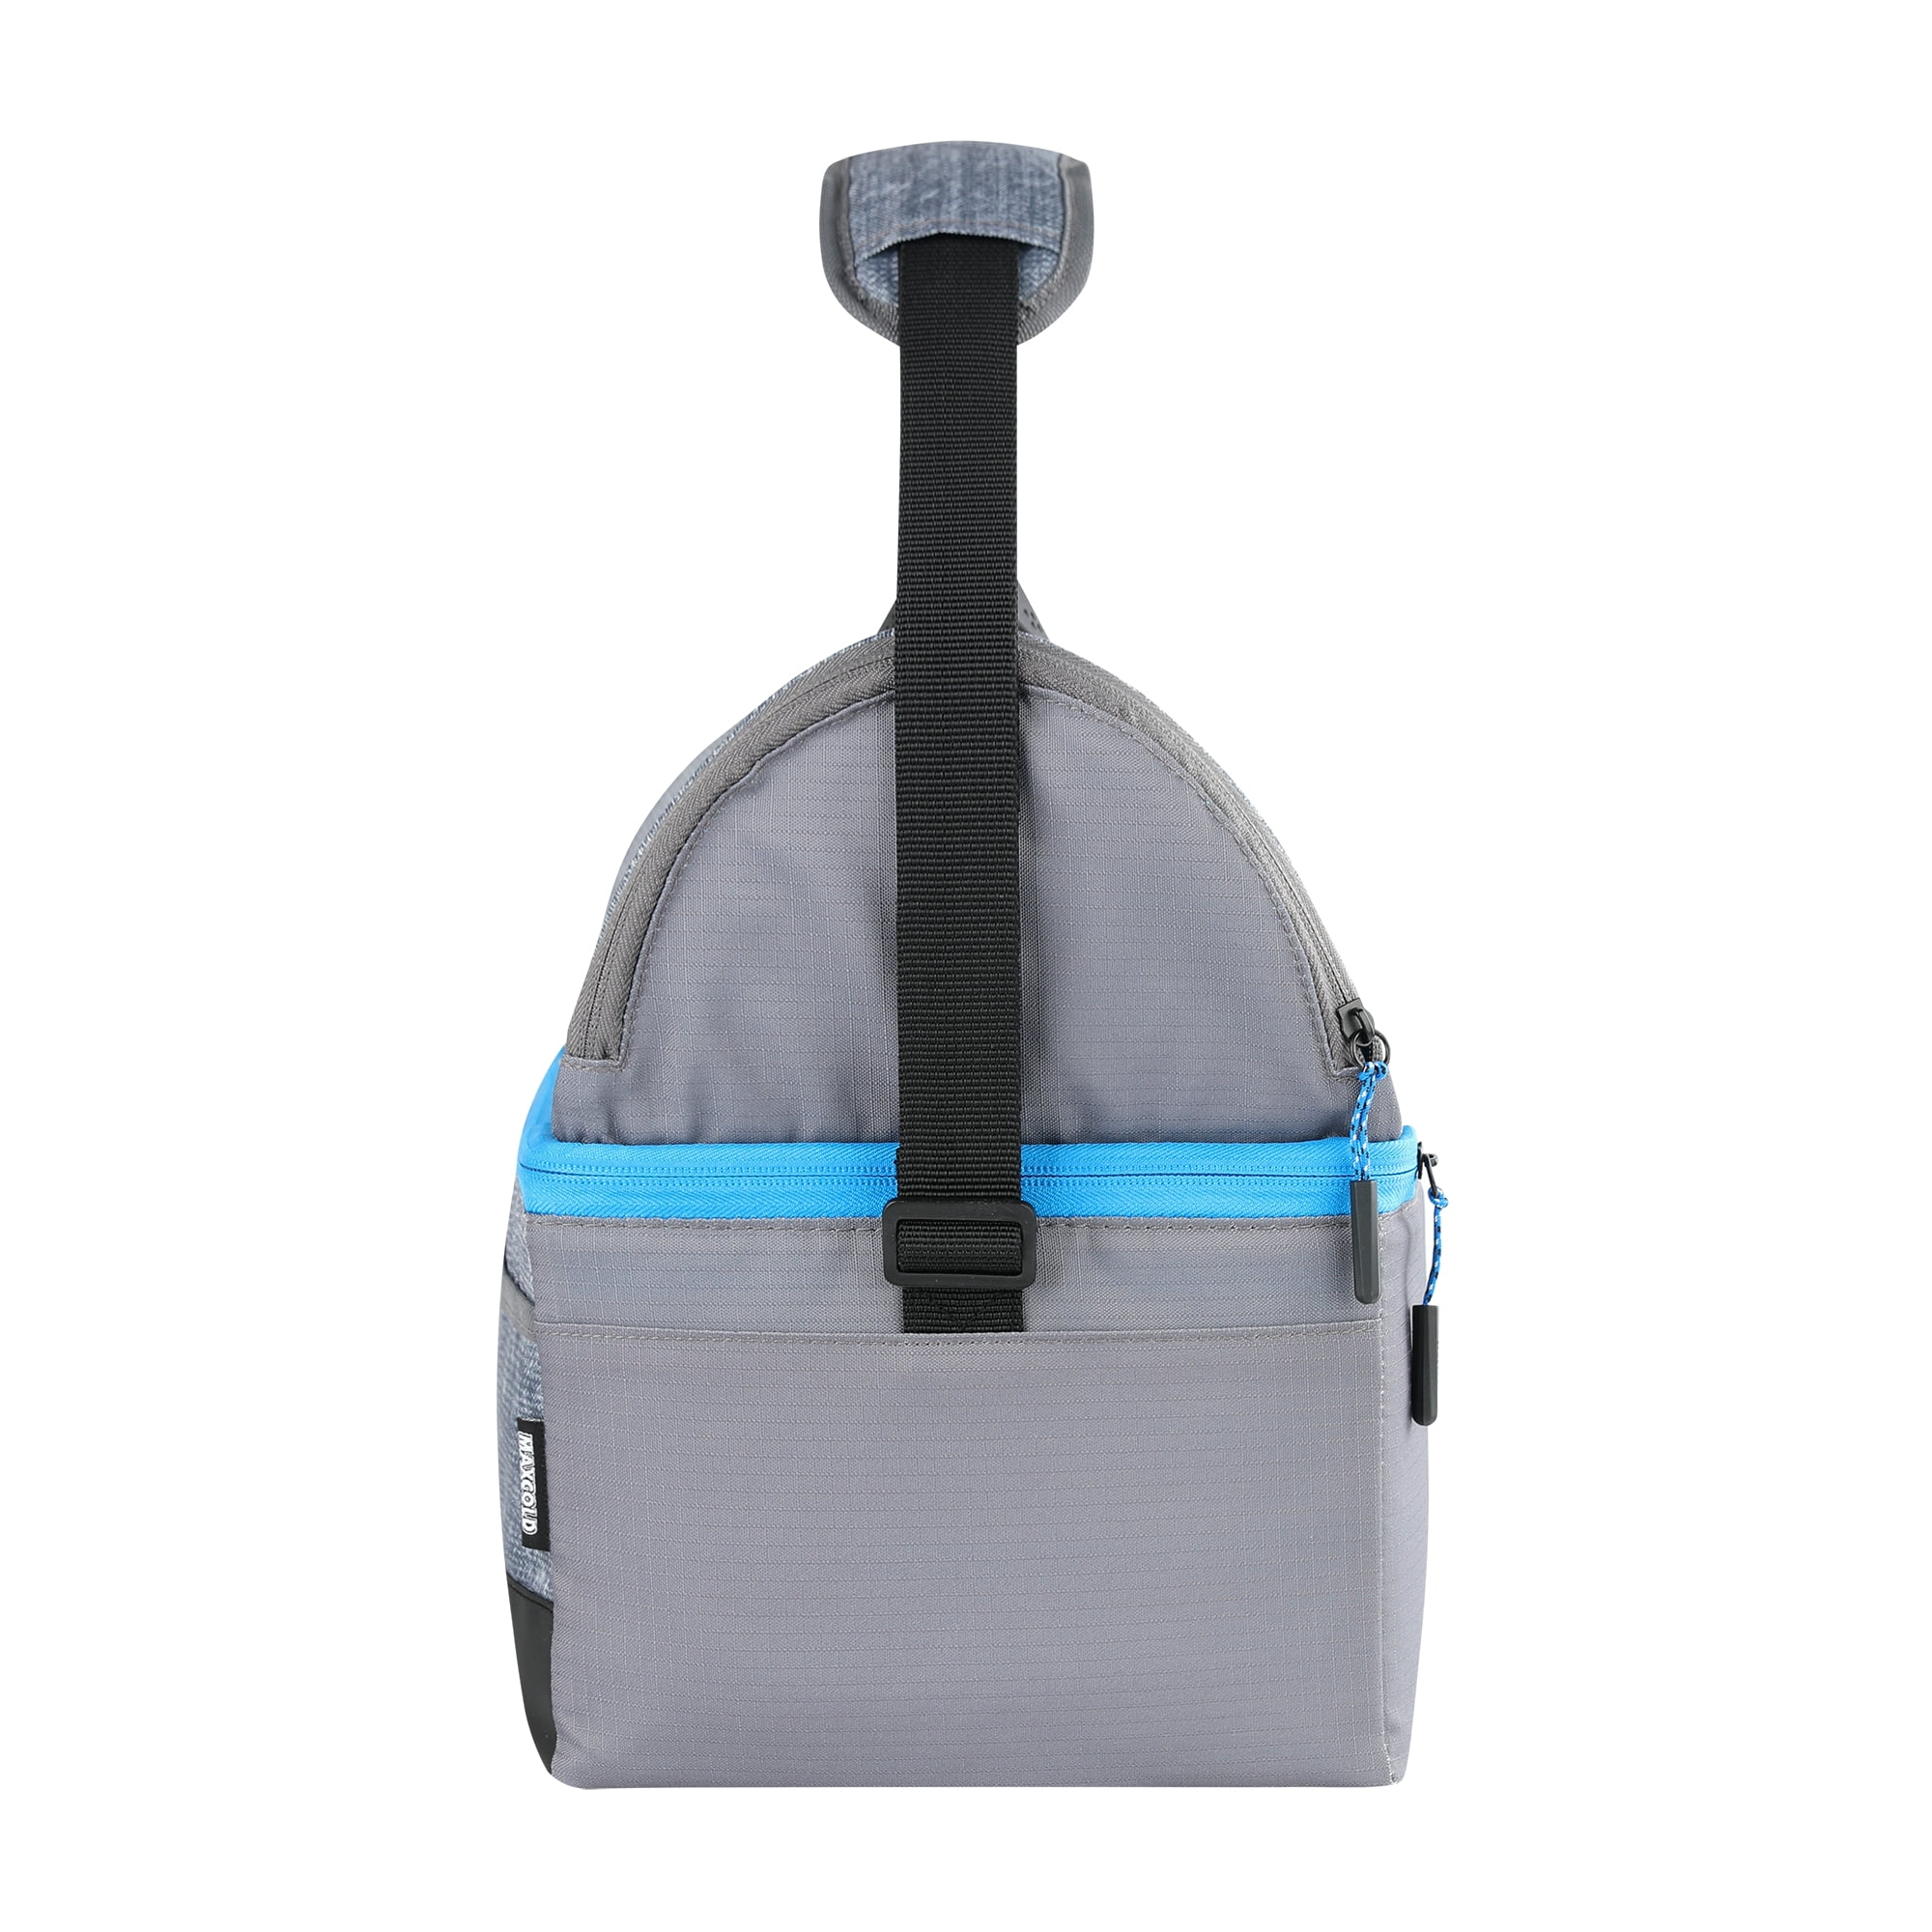 Igloo Playmate Gripper Sport Cooler Bag 9-can 62841 – Good's Store Online